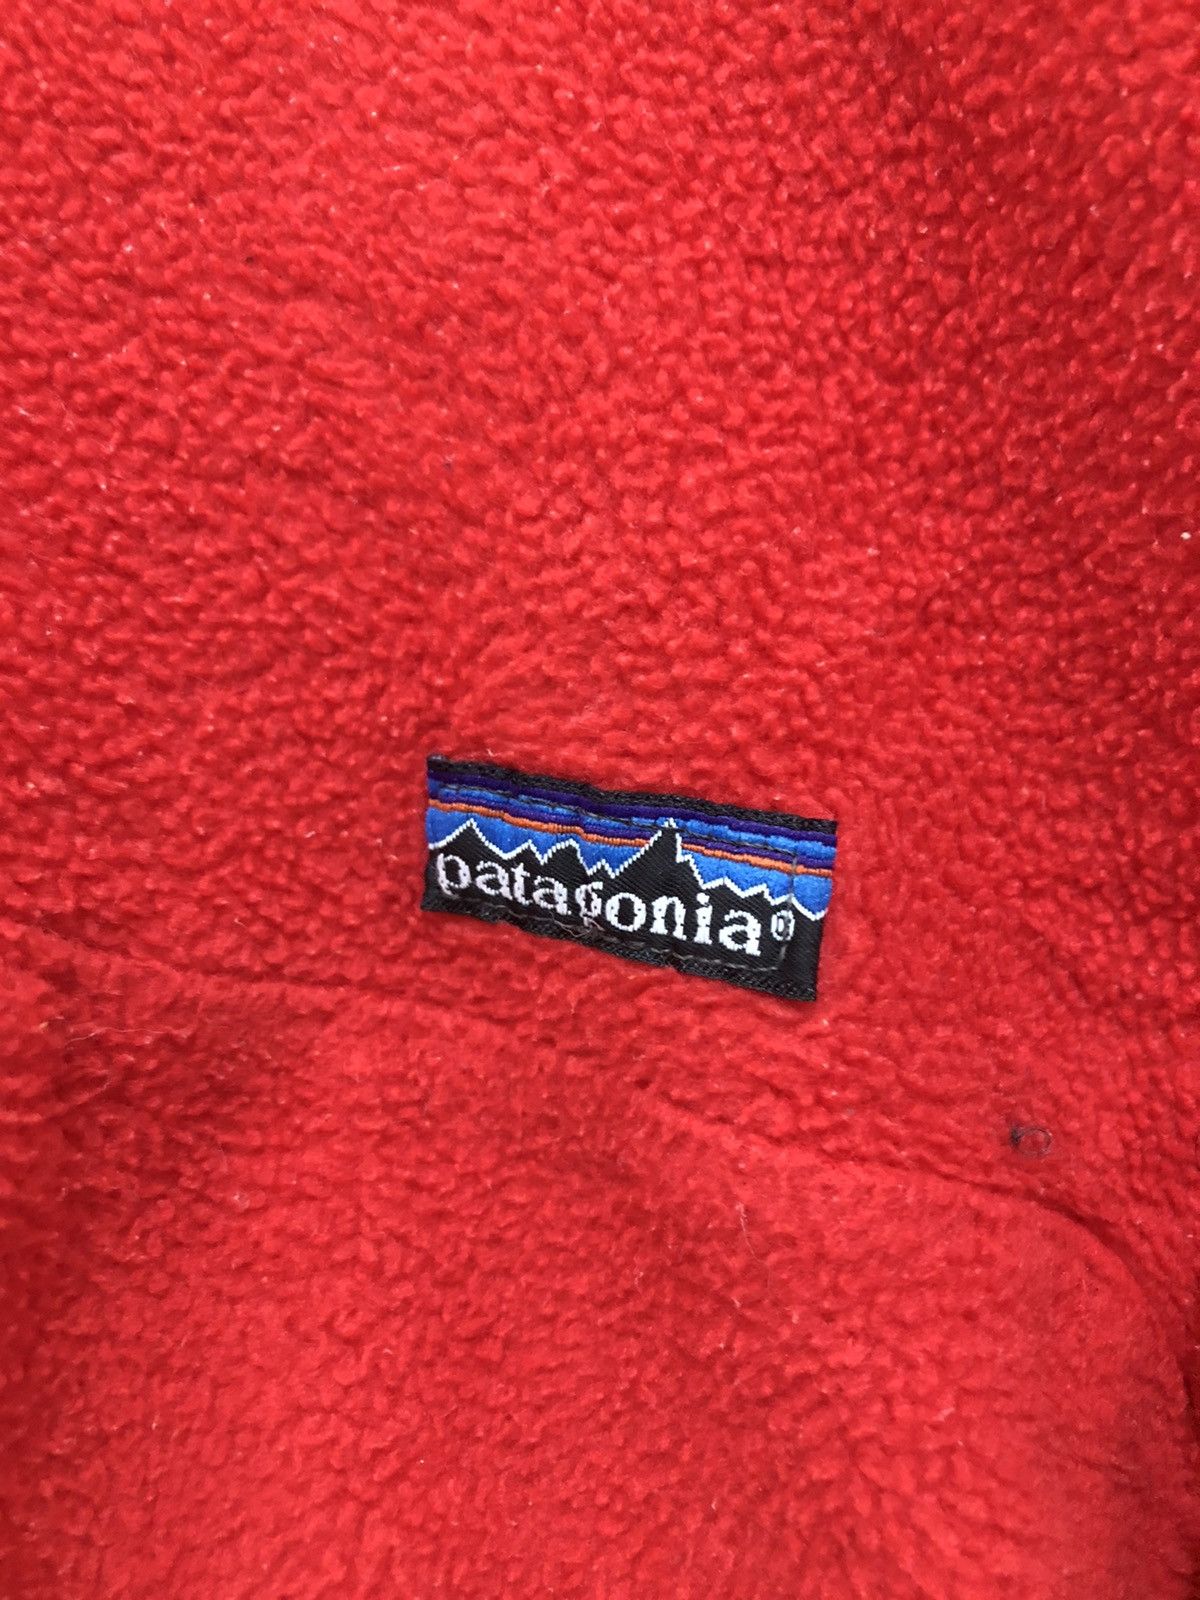 Vintage 90s Patagonia Synchilla Fleece Jacket - 3